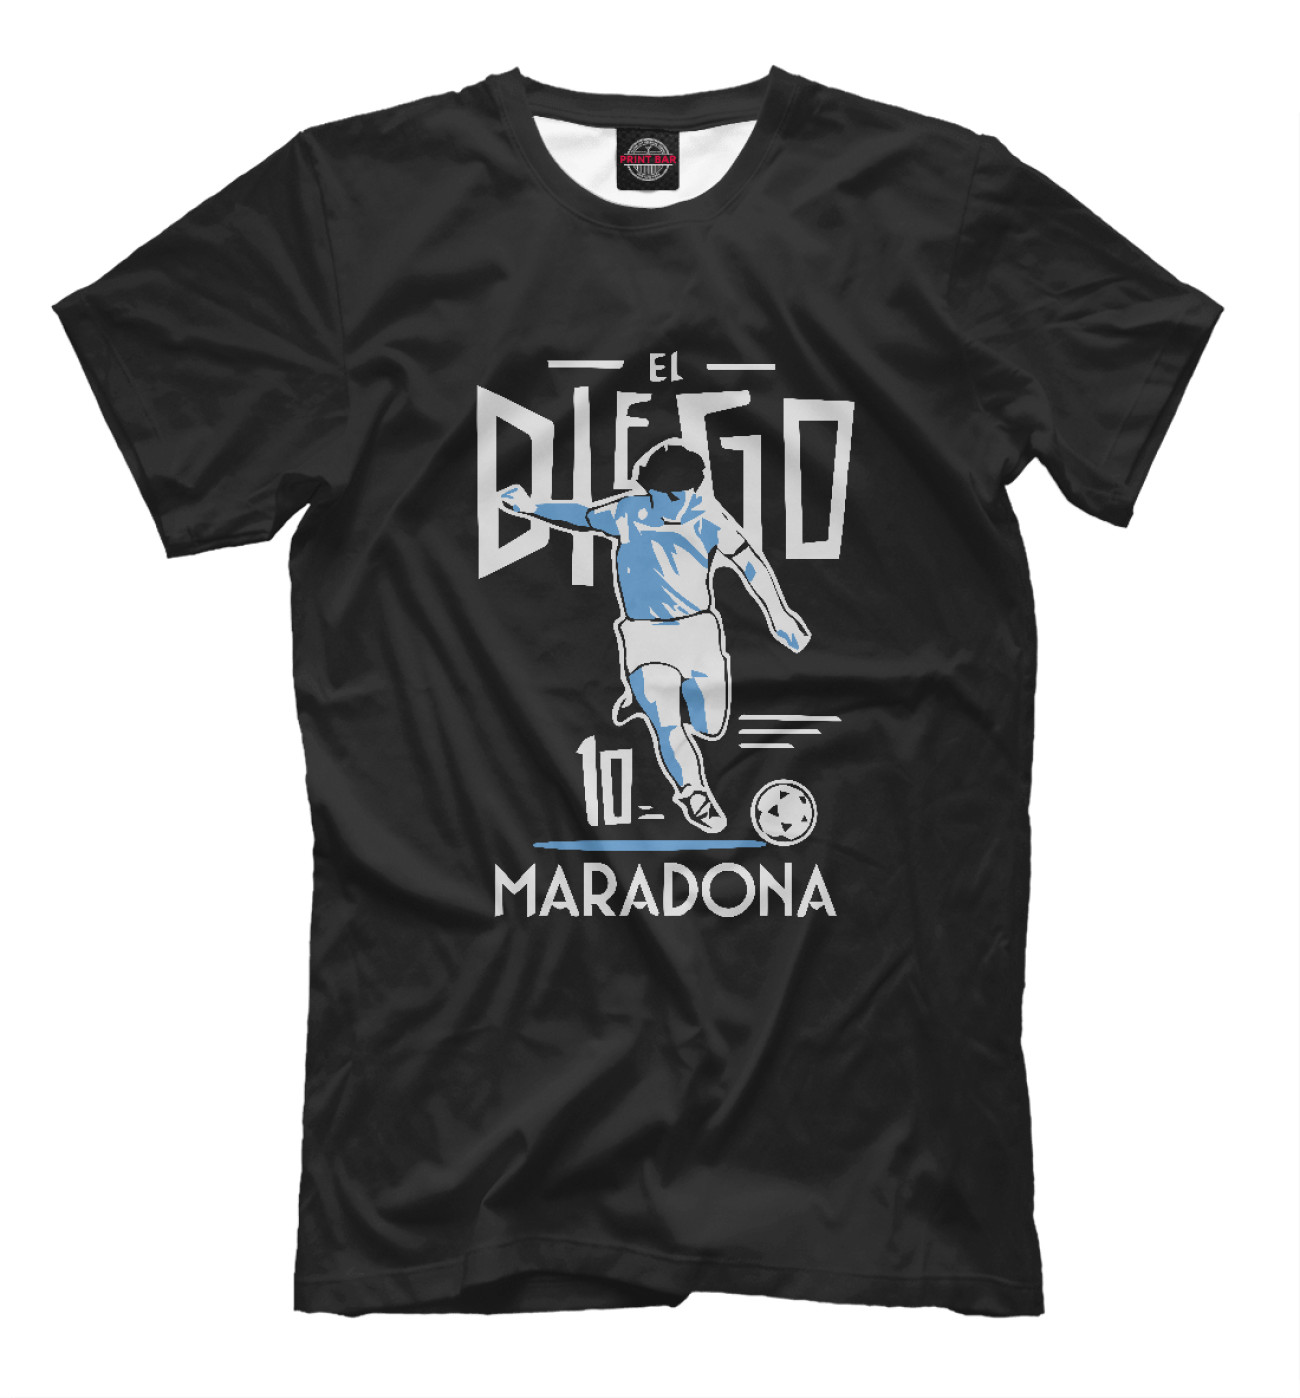 Мужская Футболка Диего Марадона, артикул: FLT-111987-fut-2